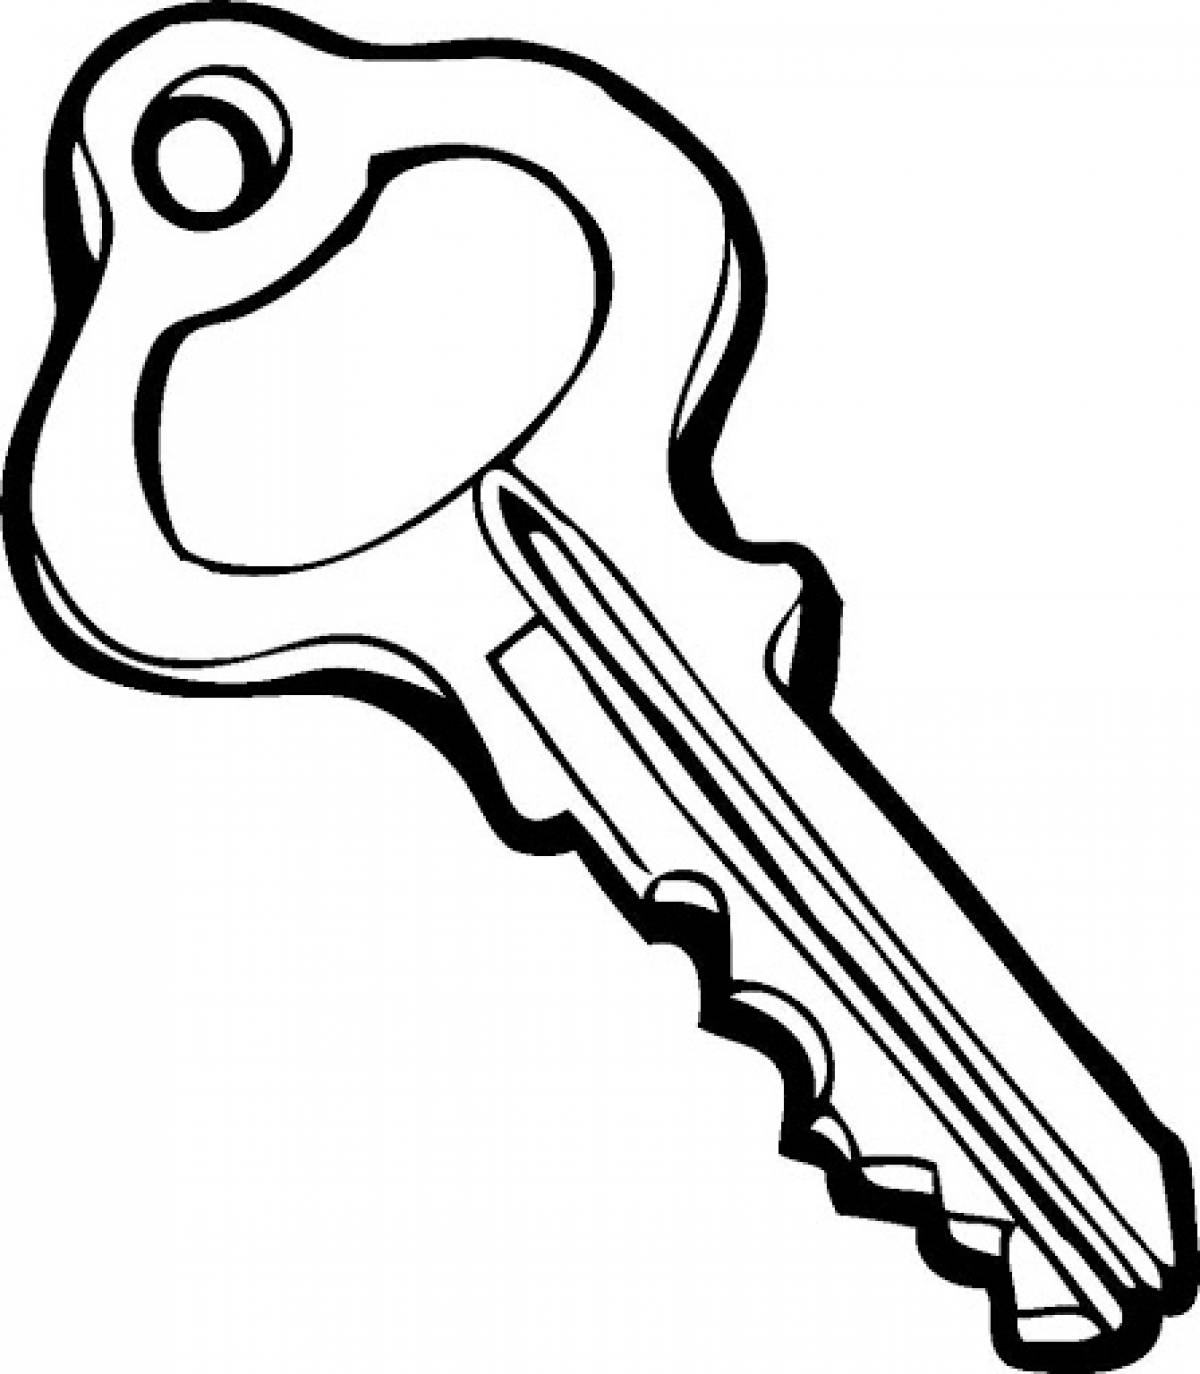 Modern key